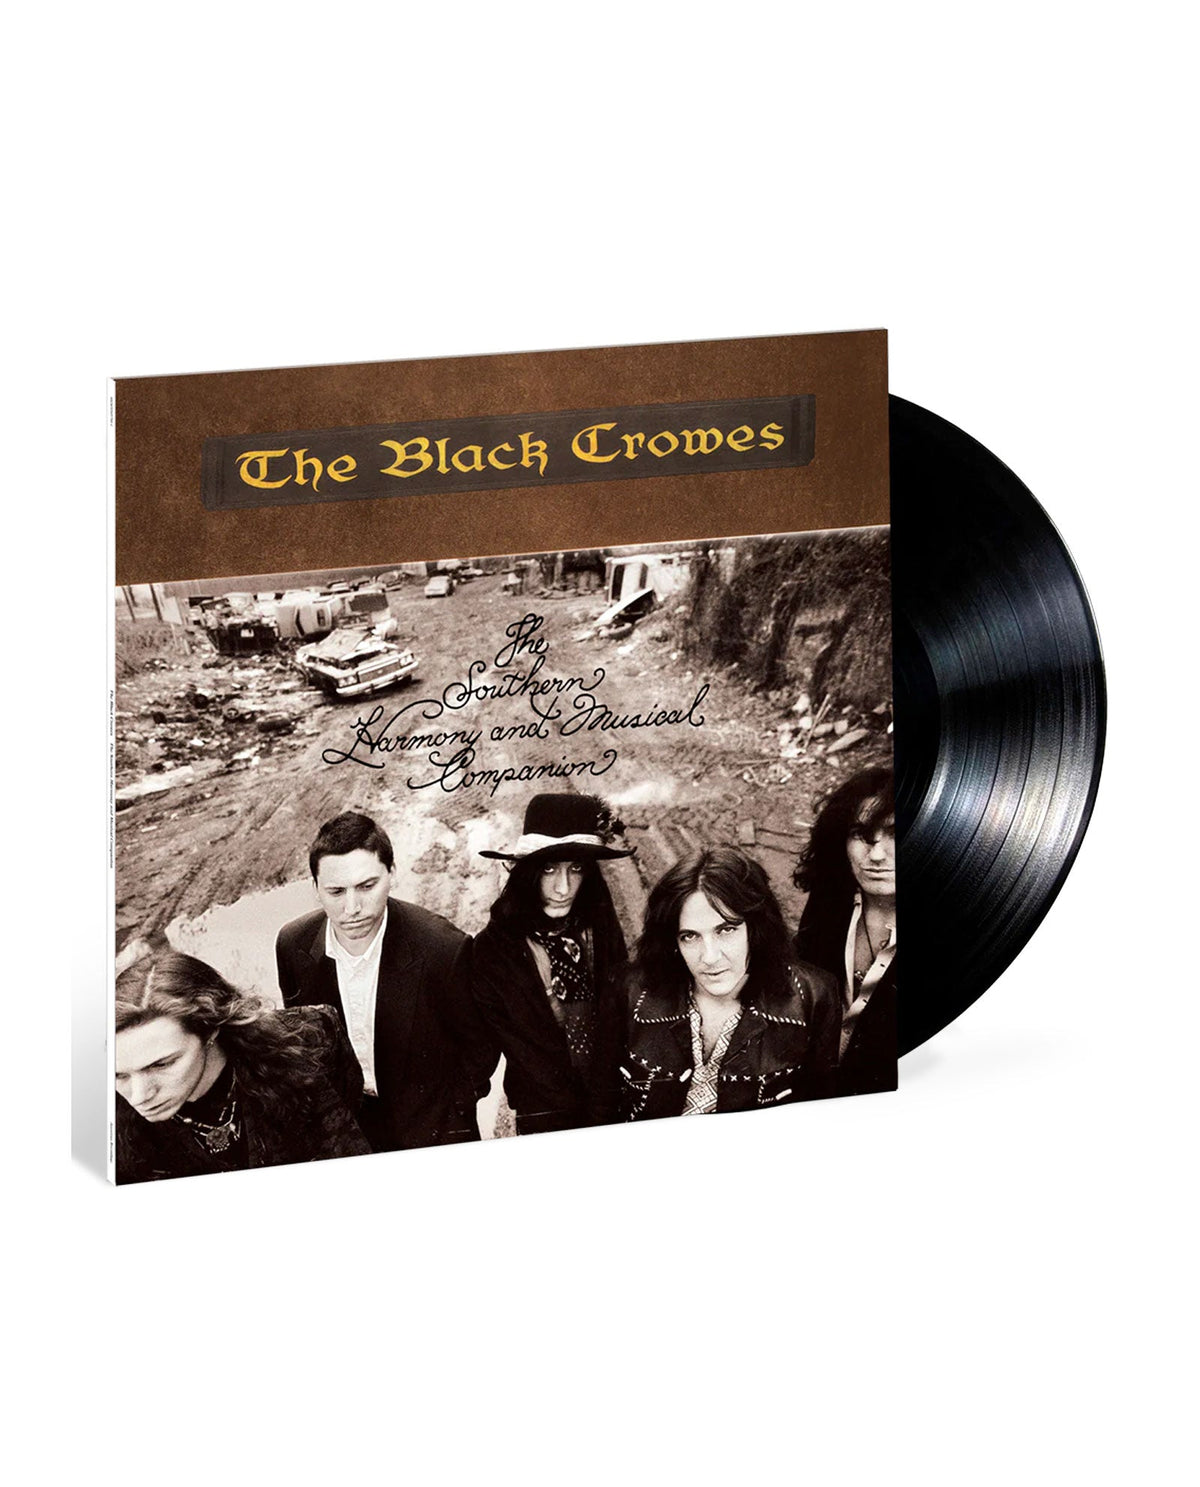 The Black Crowes - LP Vinilo Remasterizado "The Southern Harmony And Musical Companion" - D2fy · Rocktud - Rocktud